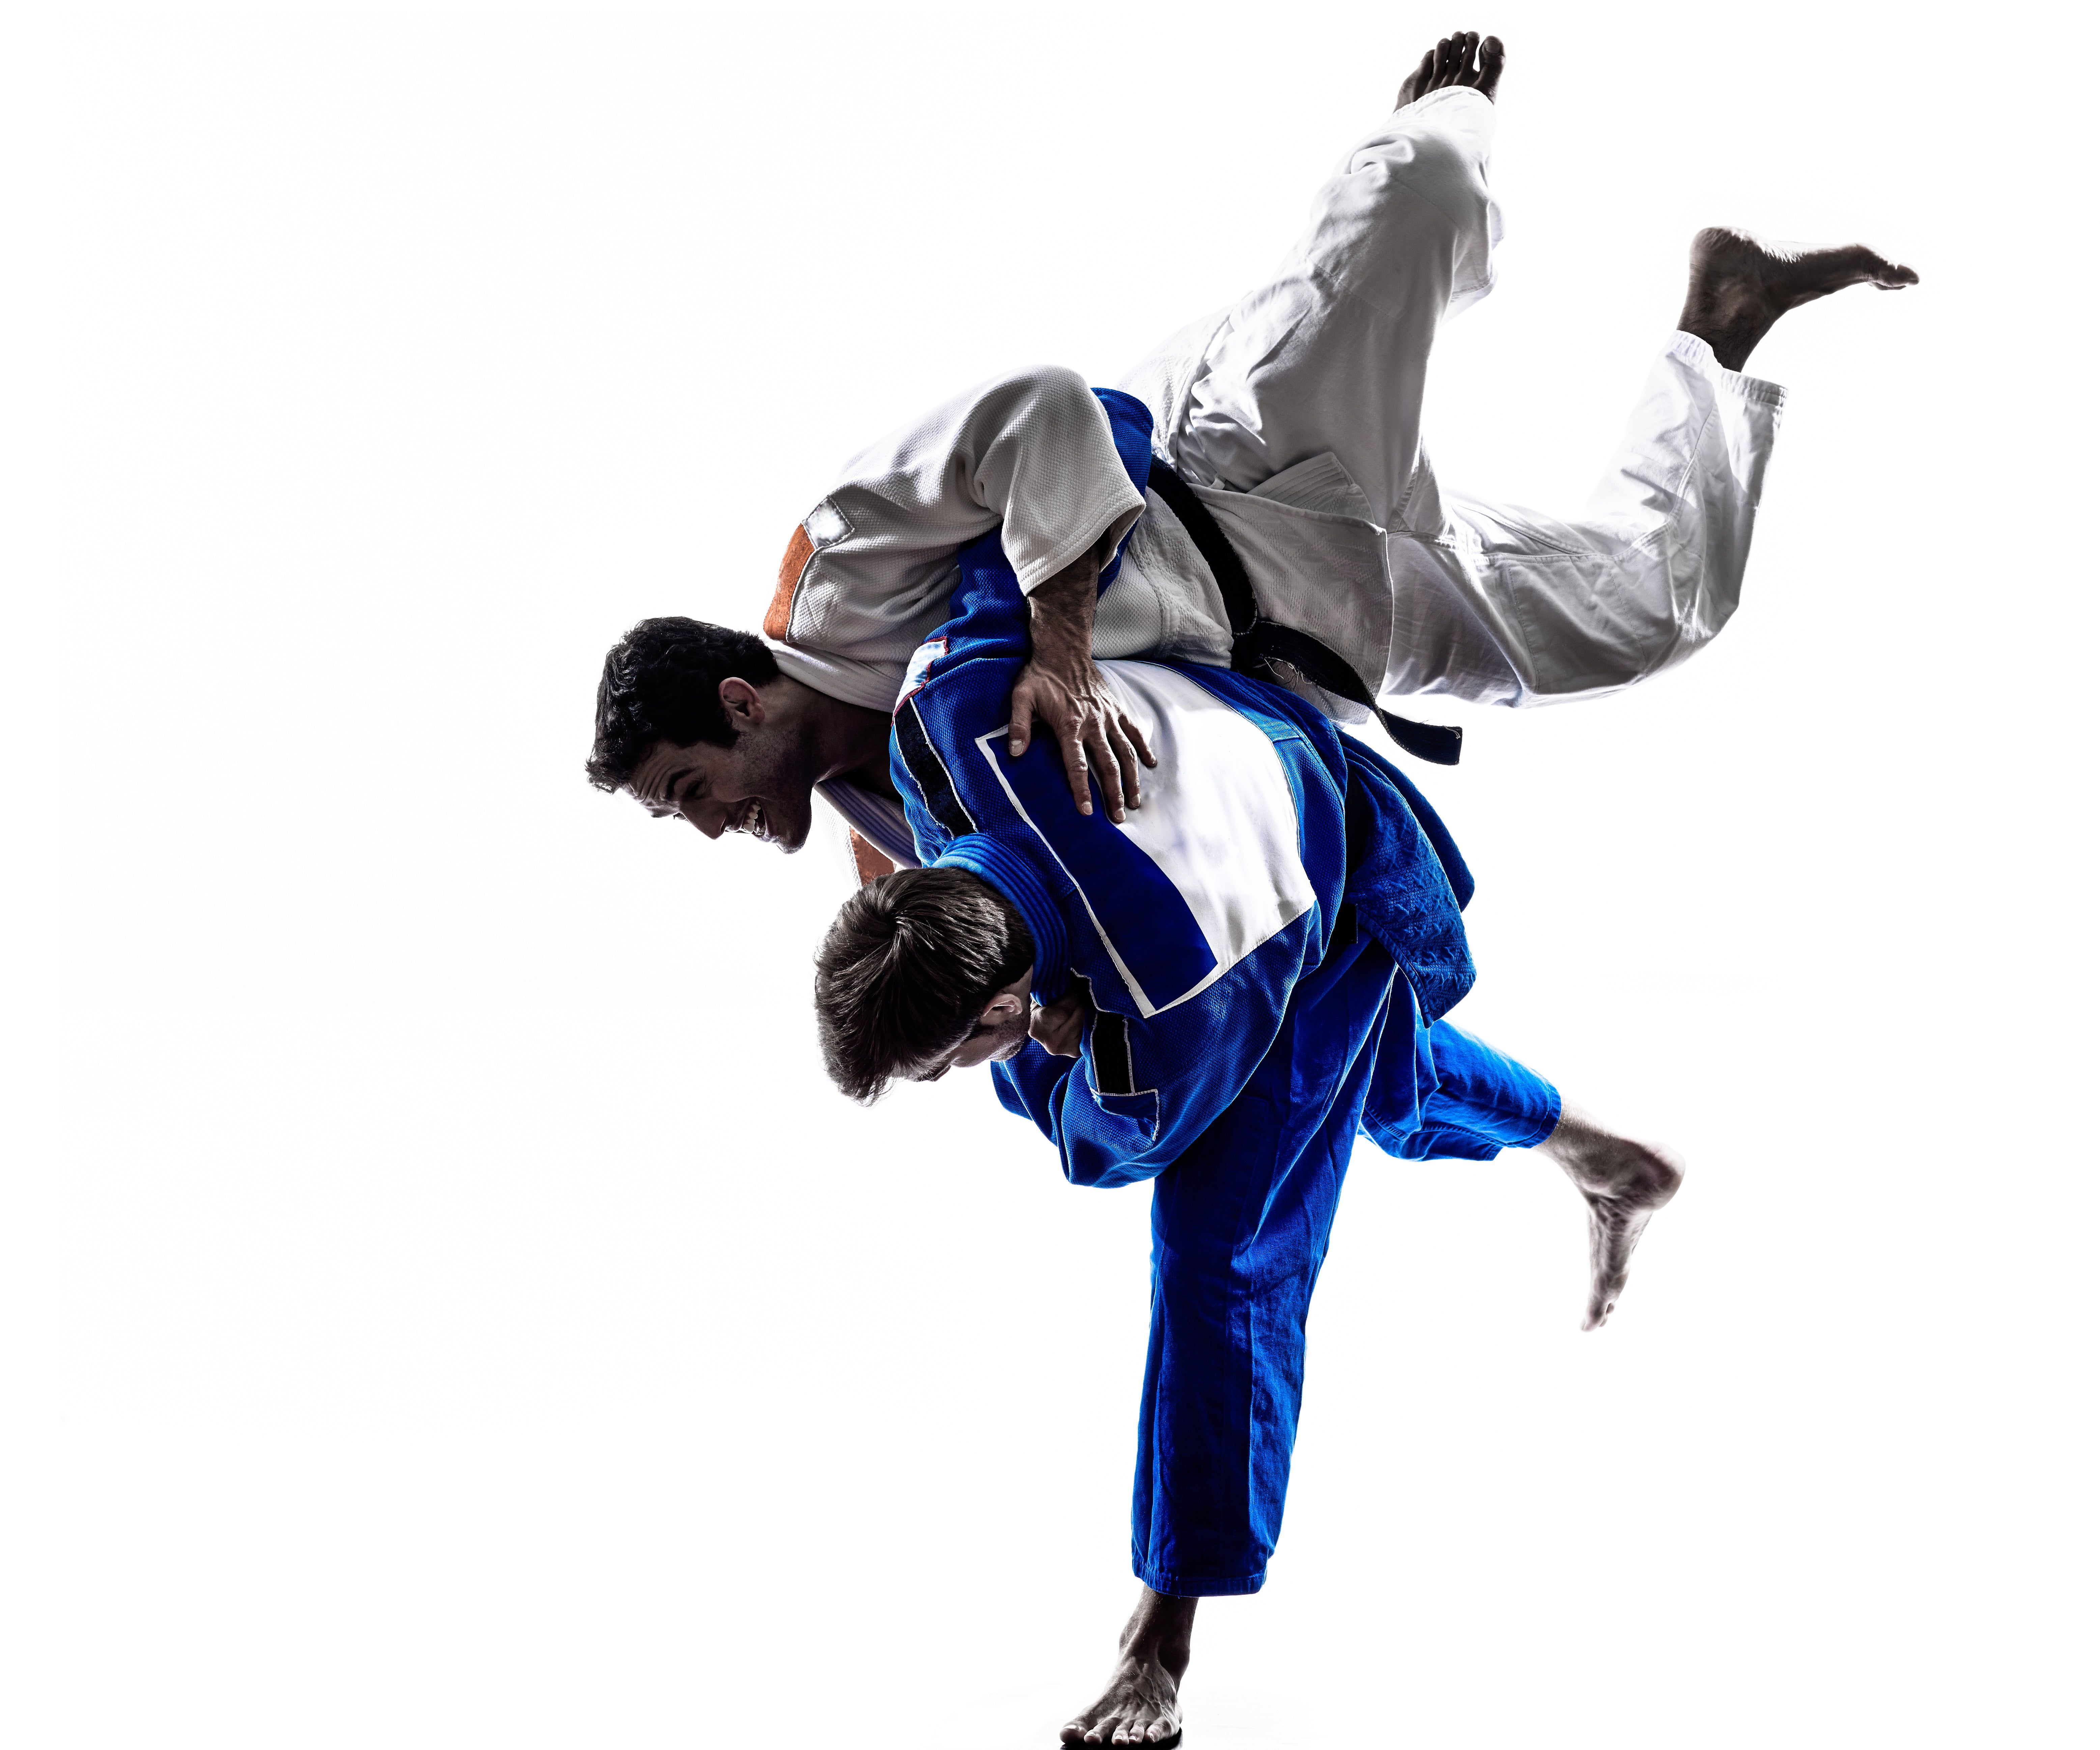 blue karate gi #fight #skill #training #technique #judo K